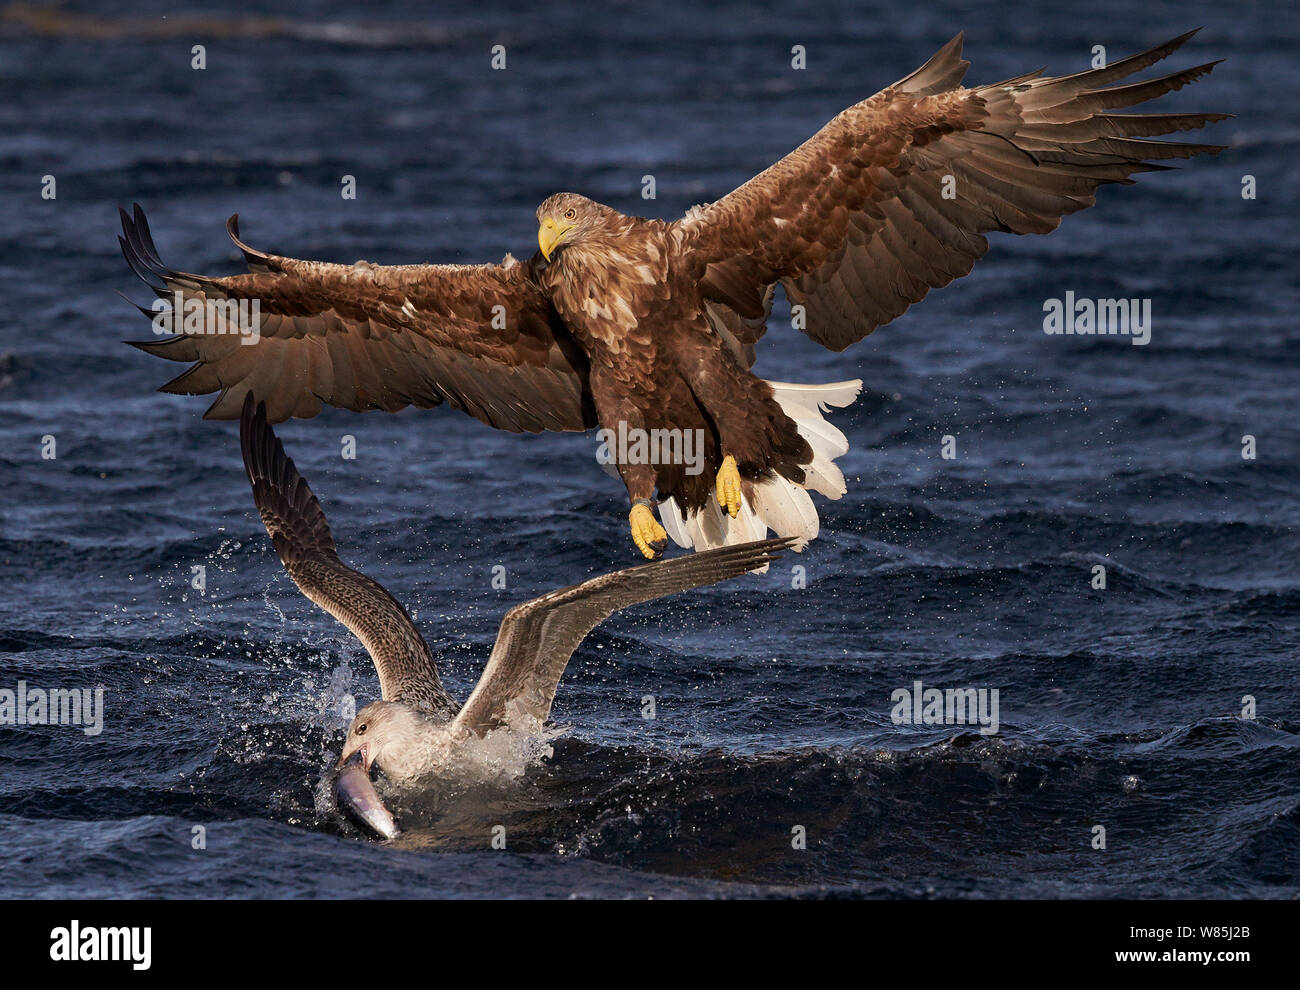 White-tailed eagle (Haliaeetus albicilla) chasing Herring gull (Larus argentatus) with fish, Norway, October. Stock Photo